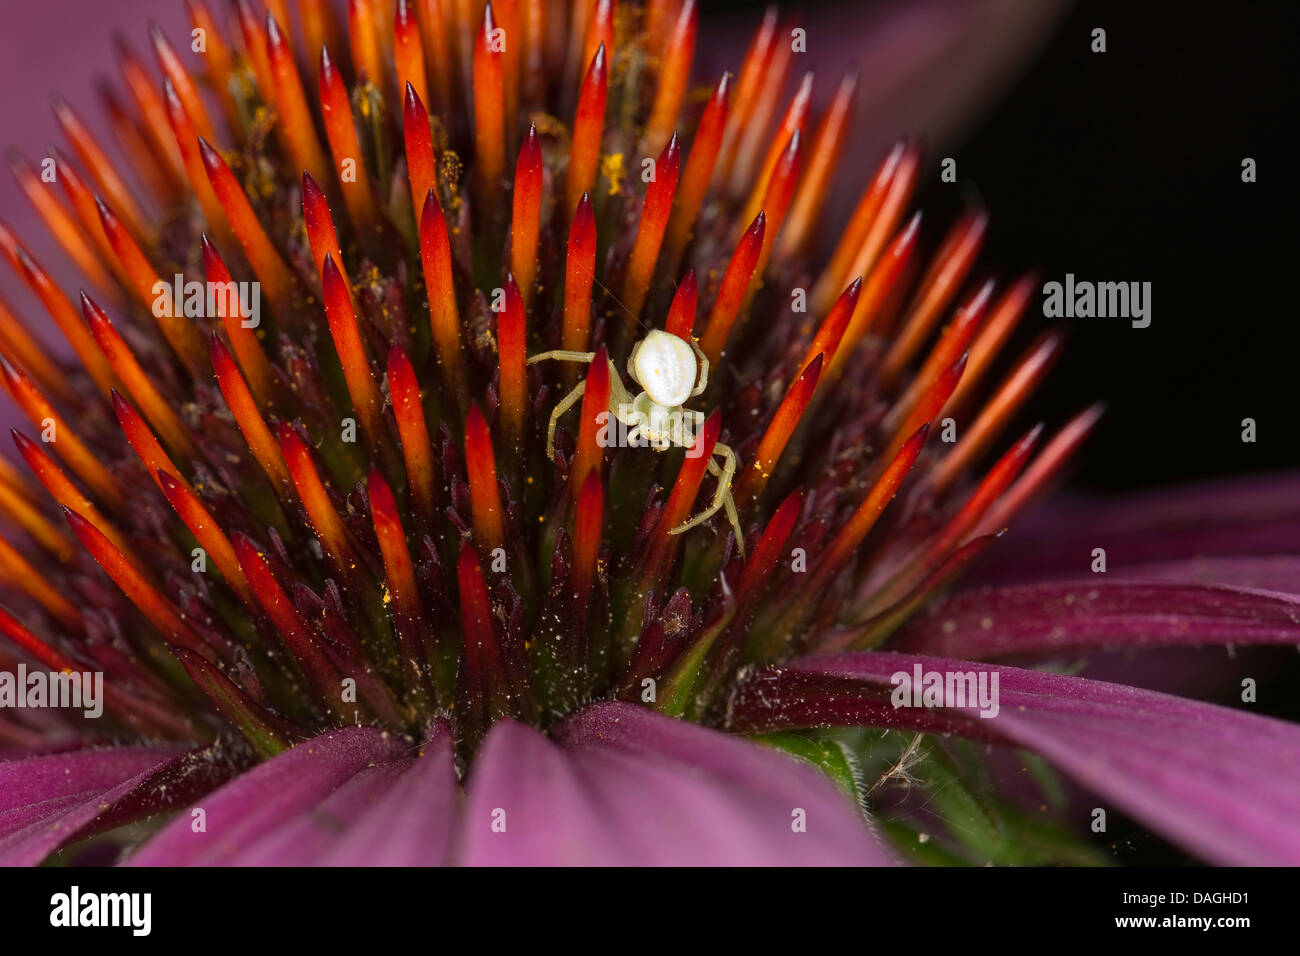 goldenrod crab spider (Misumena vatia), female on flower of an Echinacea, Germany Stock Photo